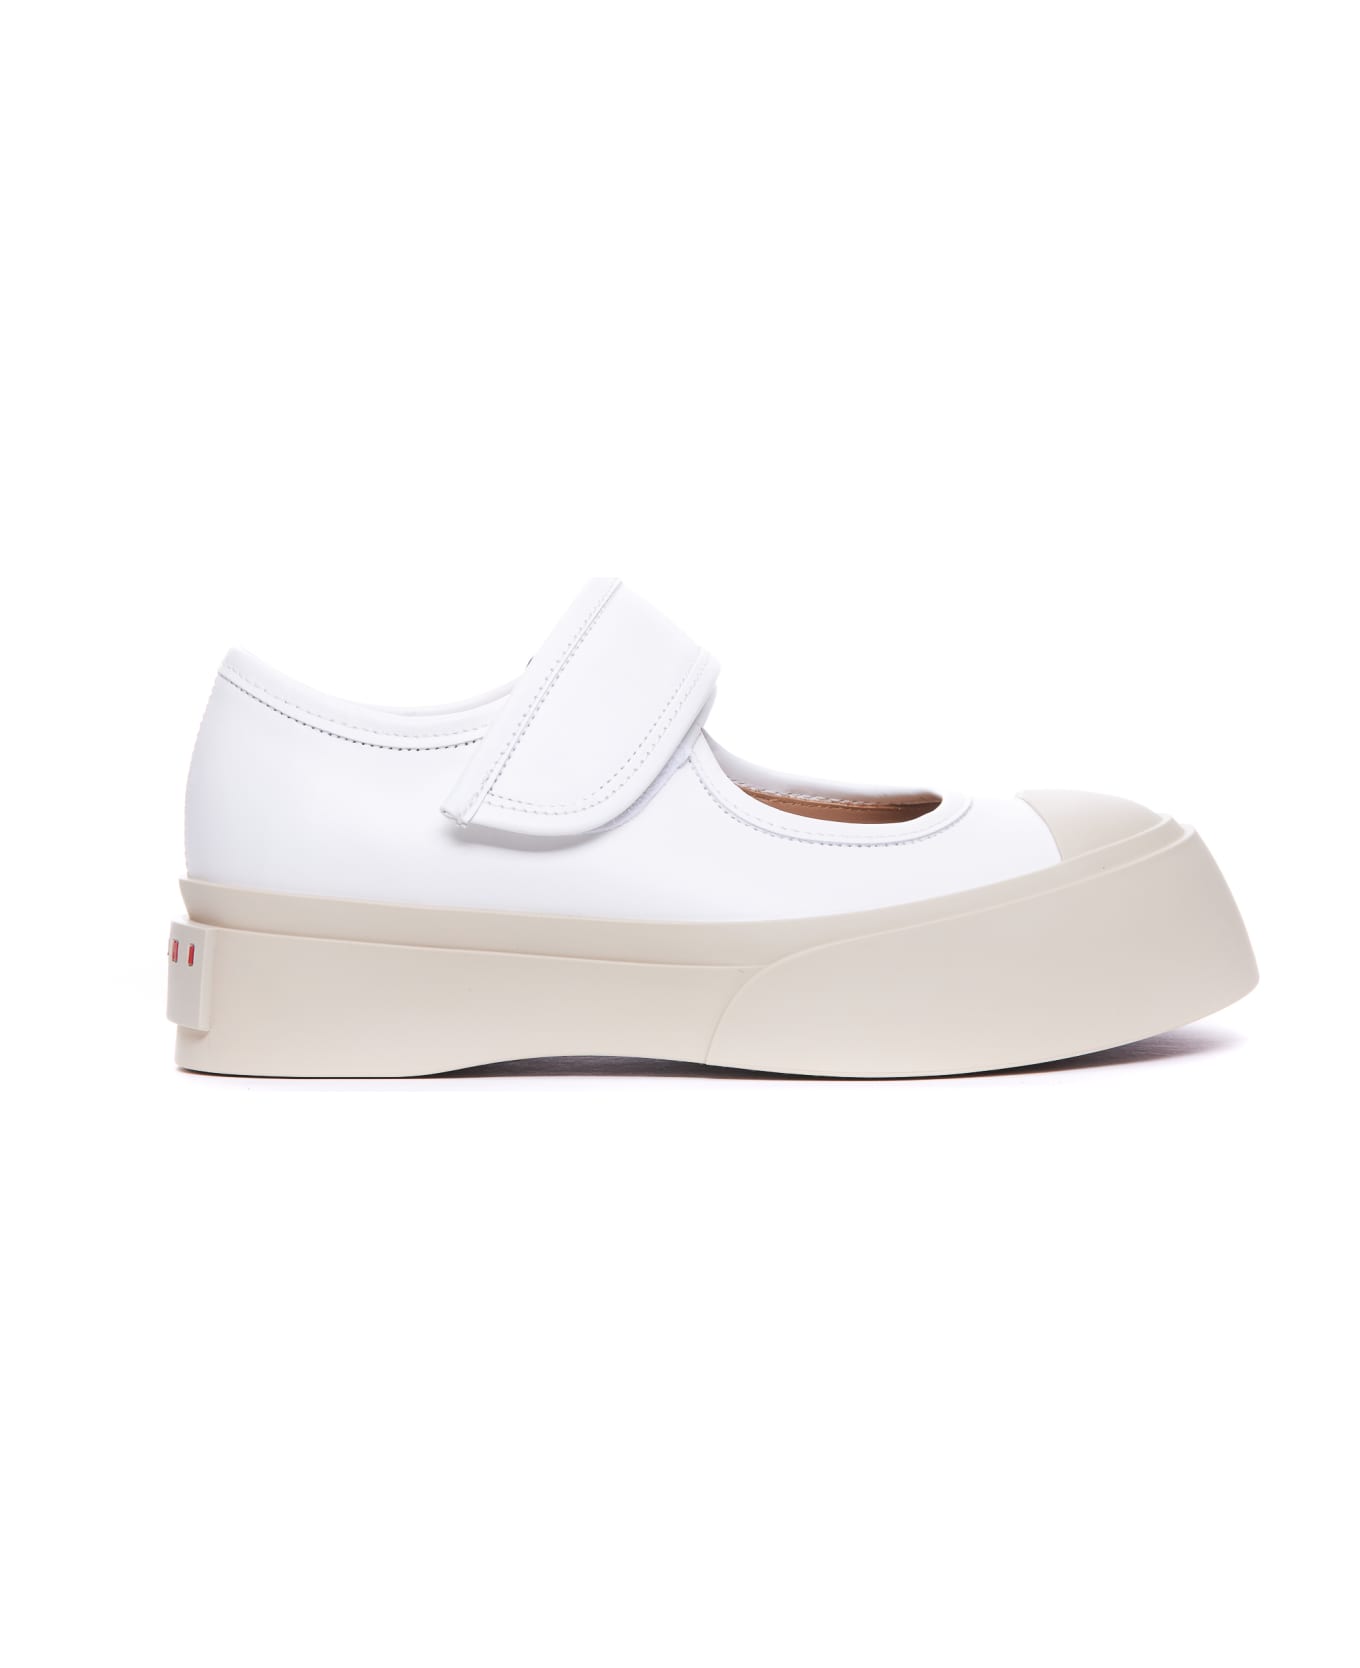 Marni Mary Jane Sneakers - White